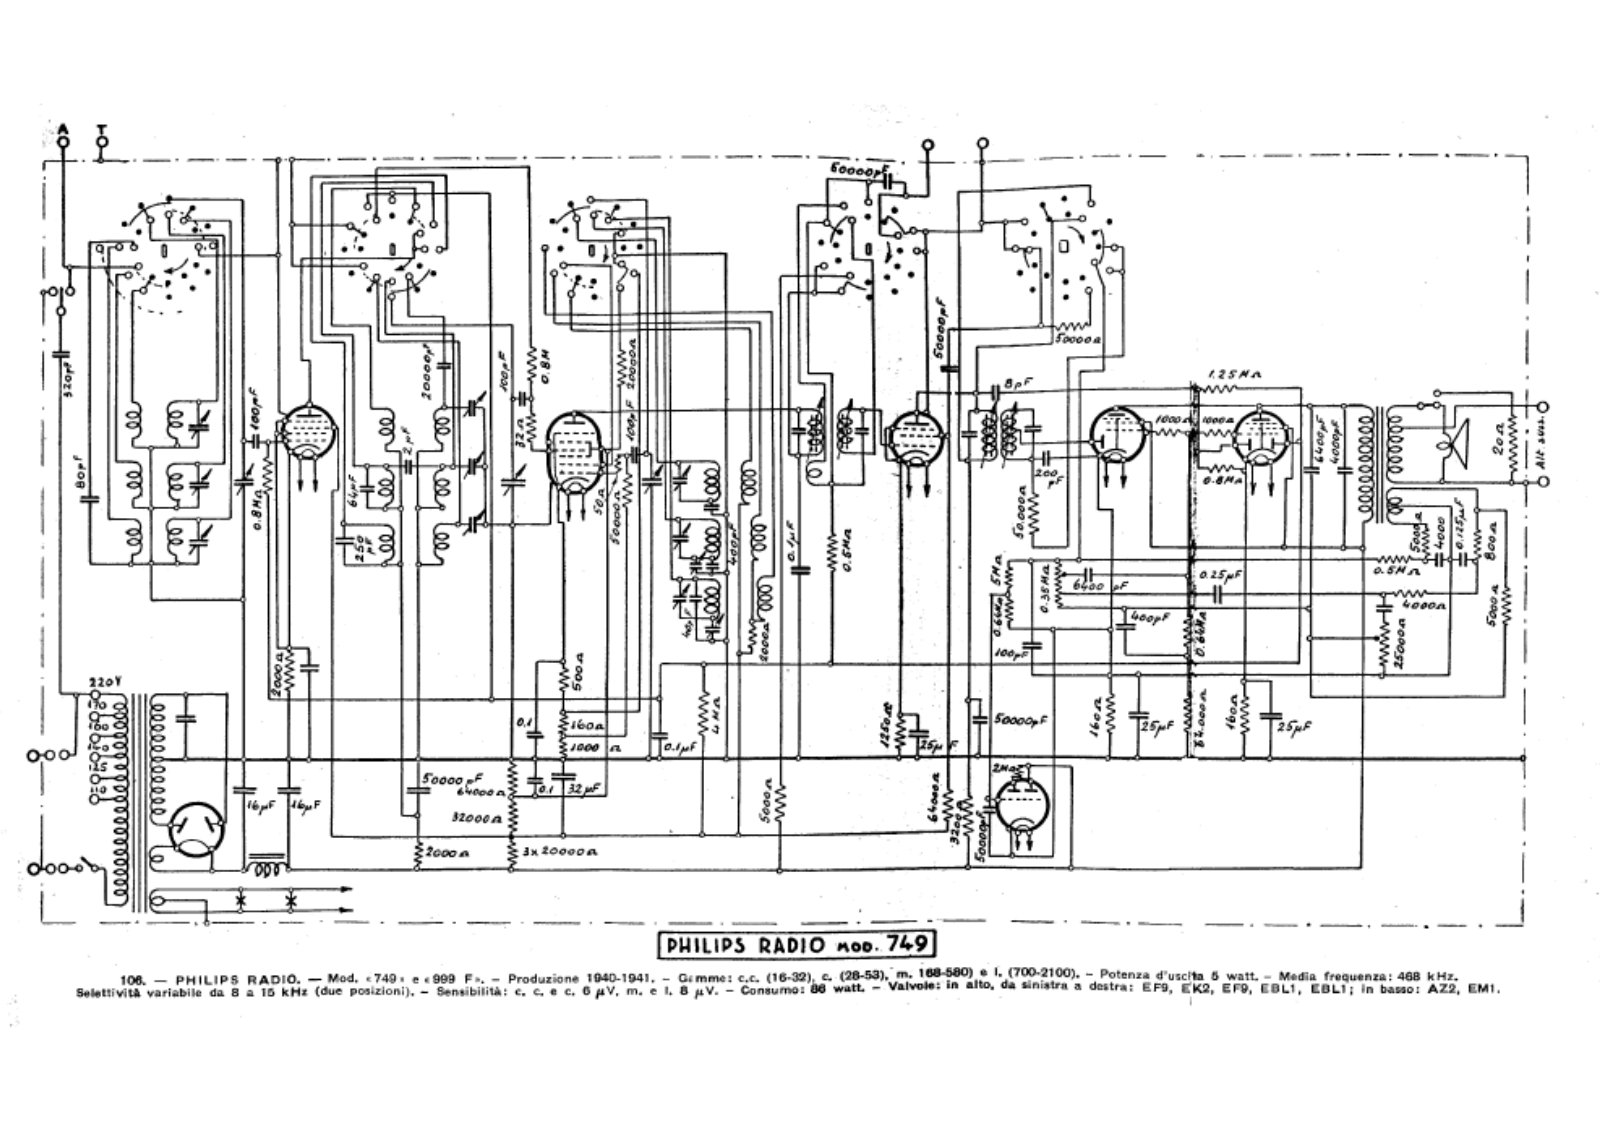 Philips 749, 999f schematic